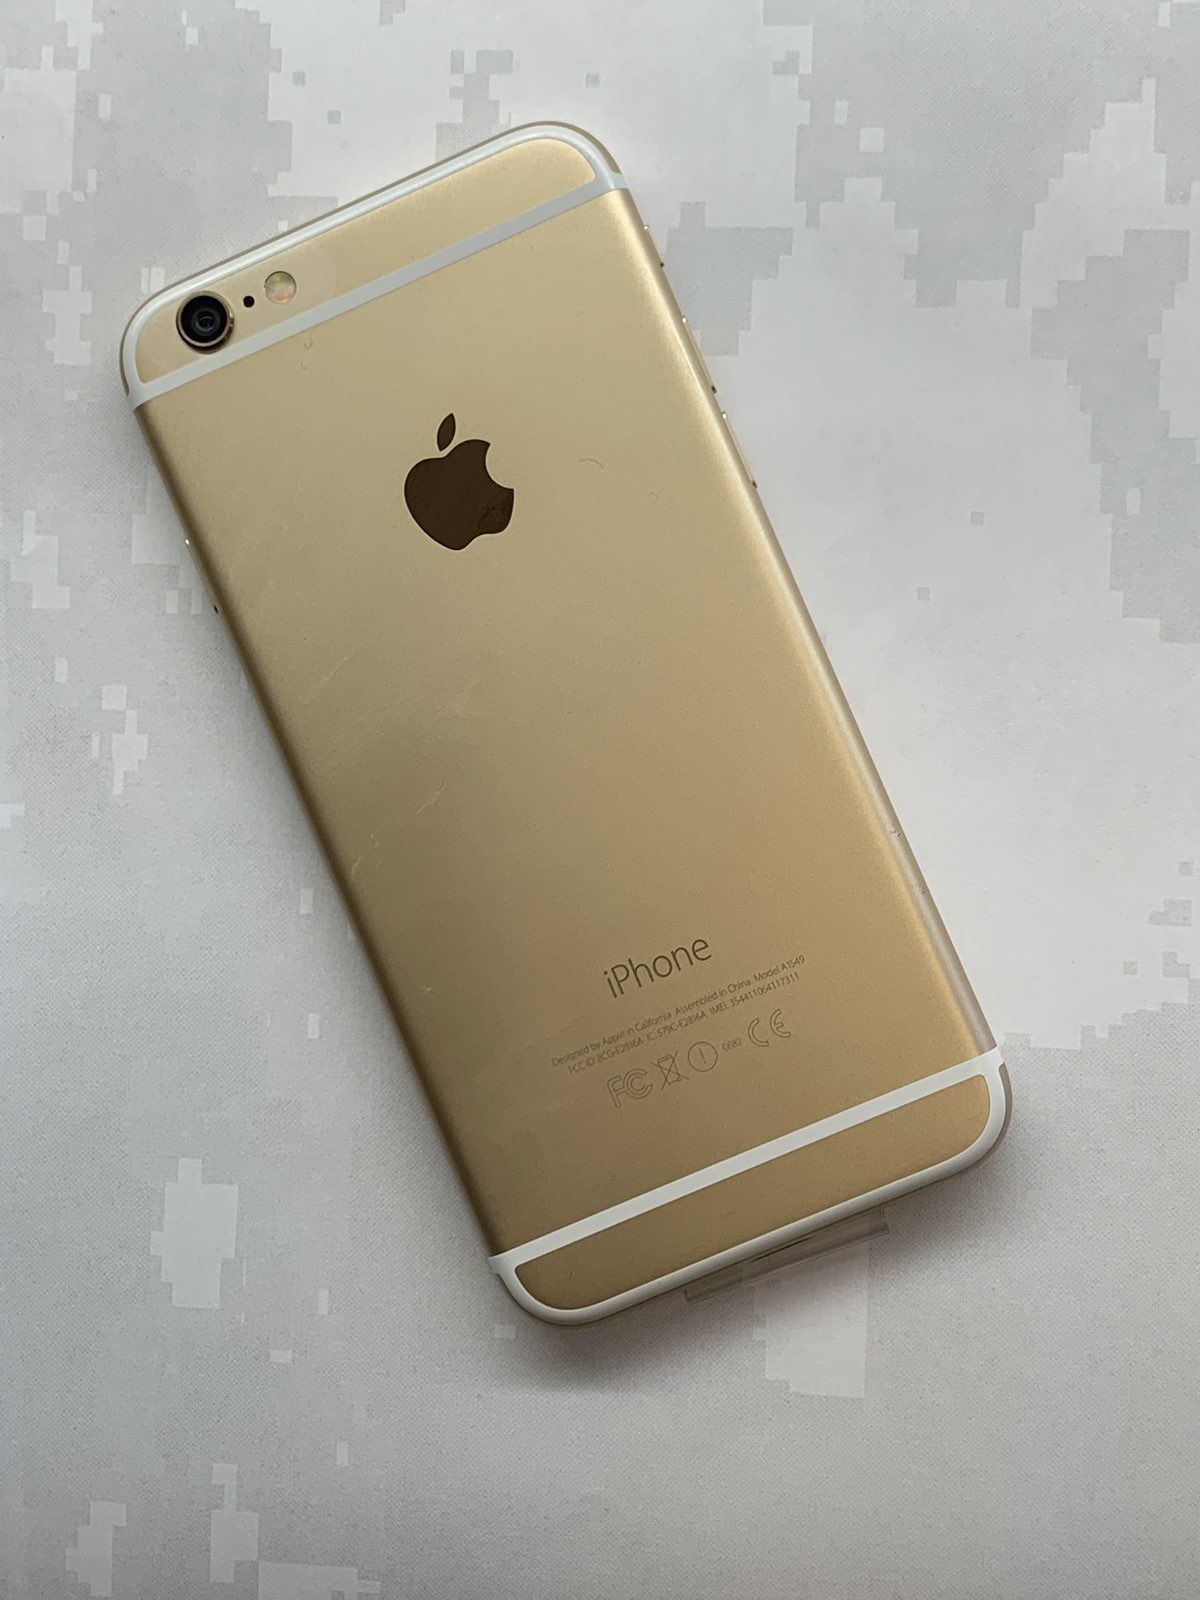 iPhone 6 64gb factory unlocked warranty